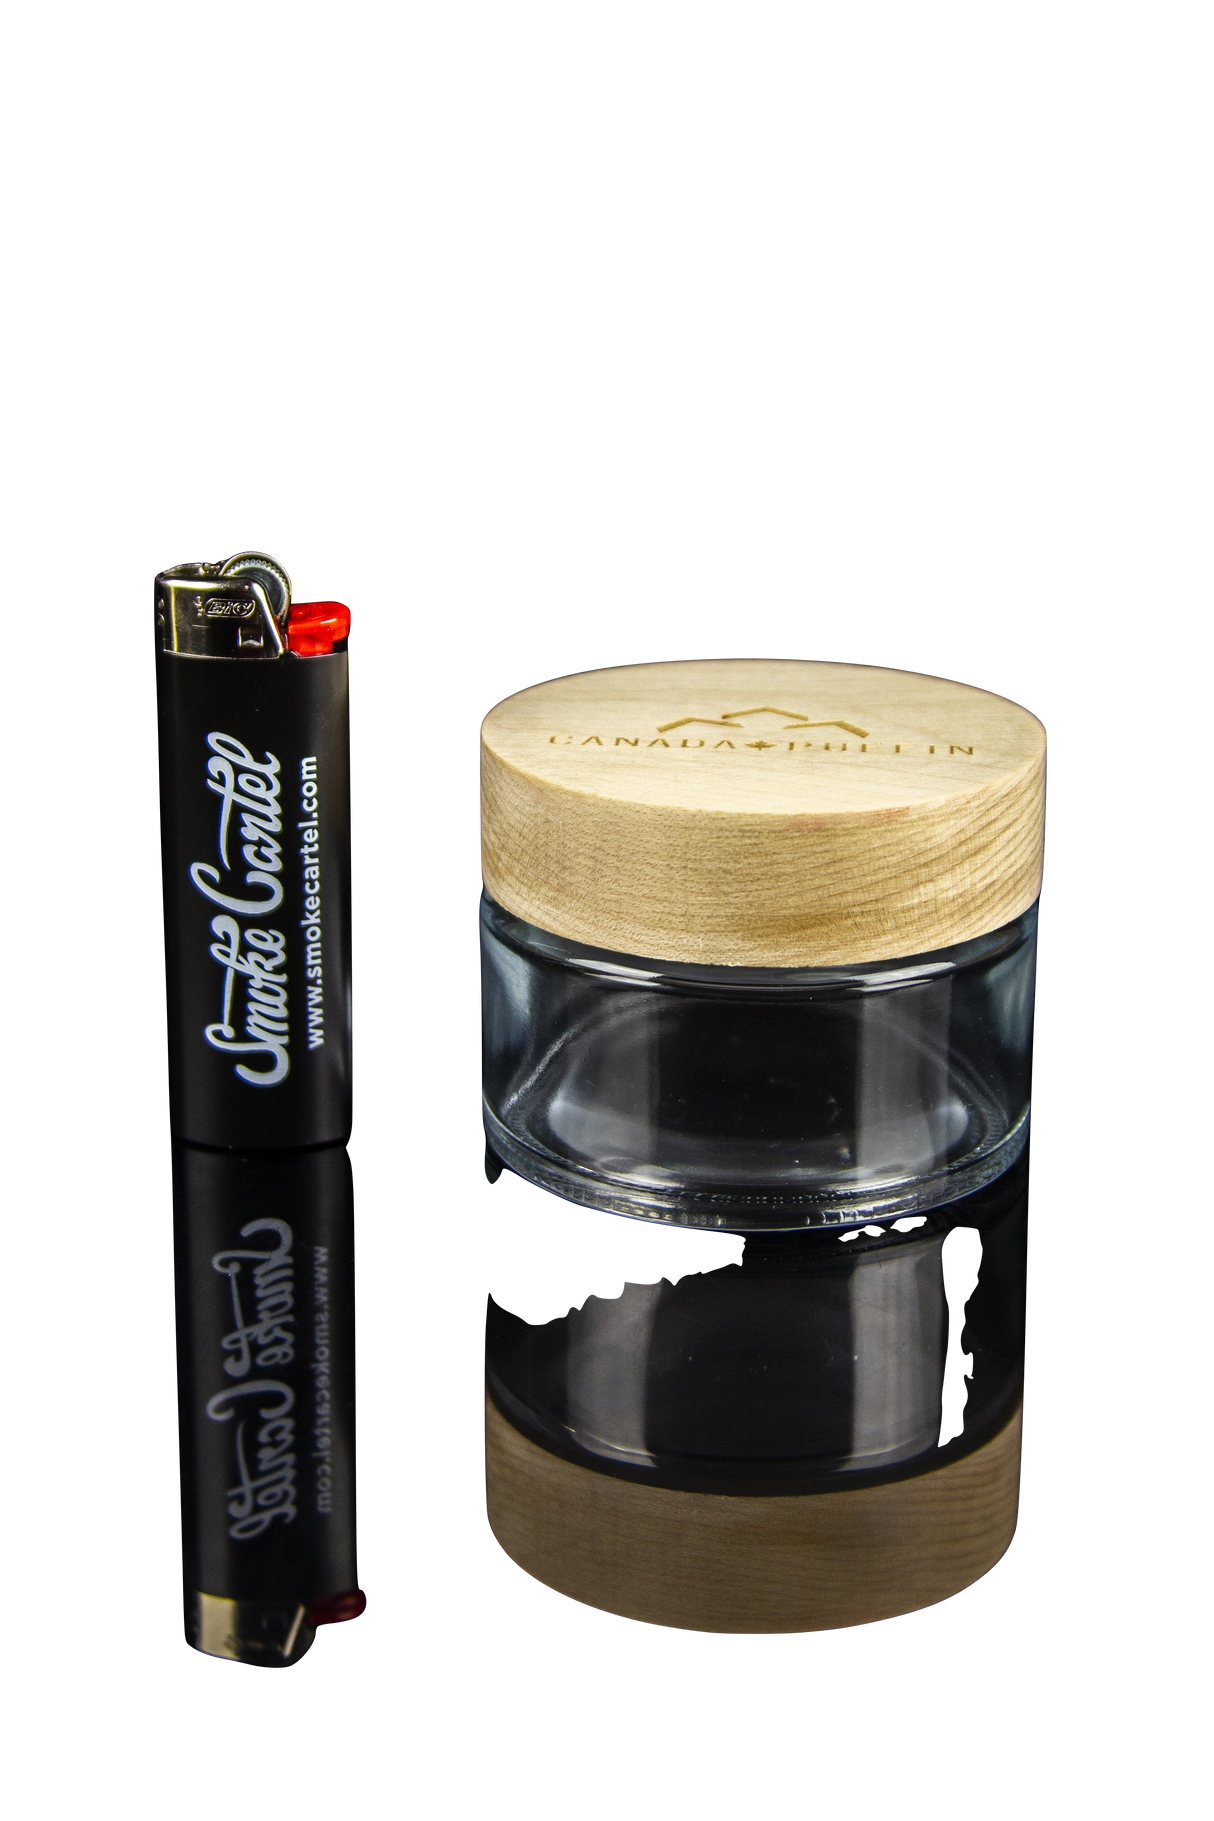 Canada Puffin Jasper Wooden Lid Storage Jar beside Clipper Lighter on Black Background